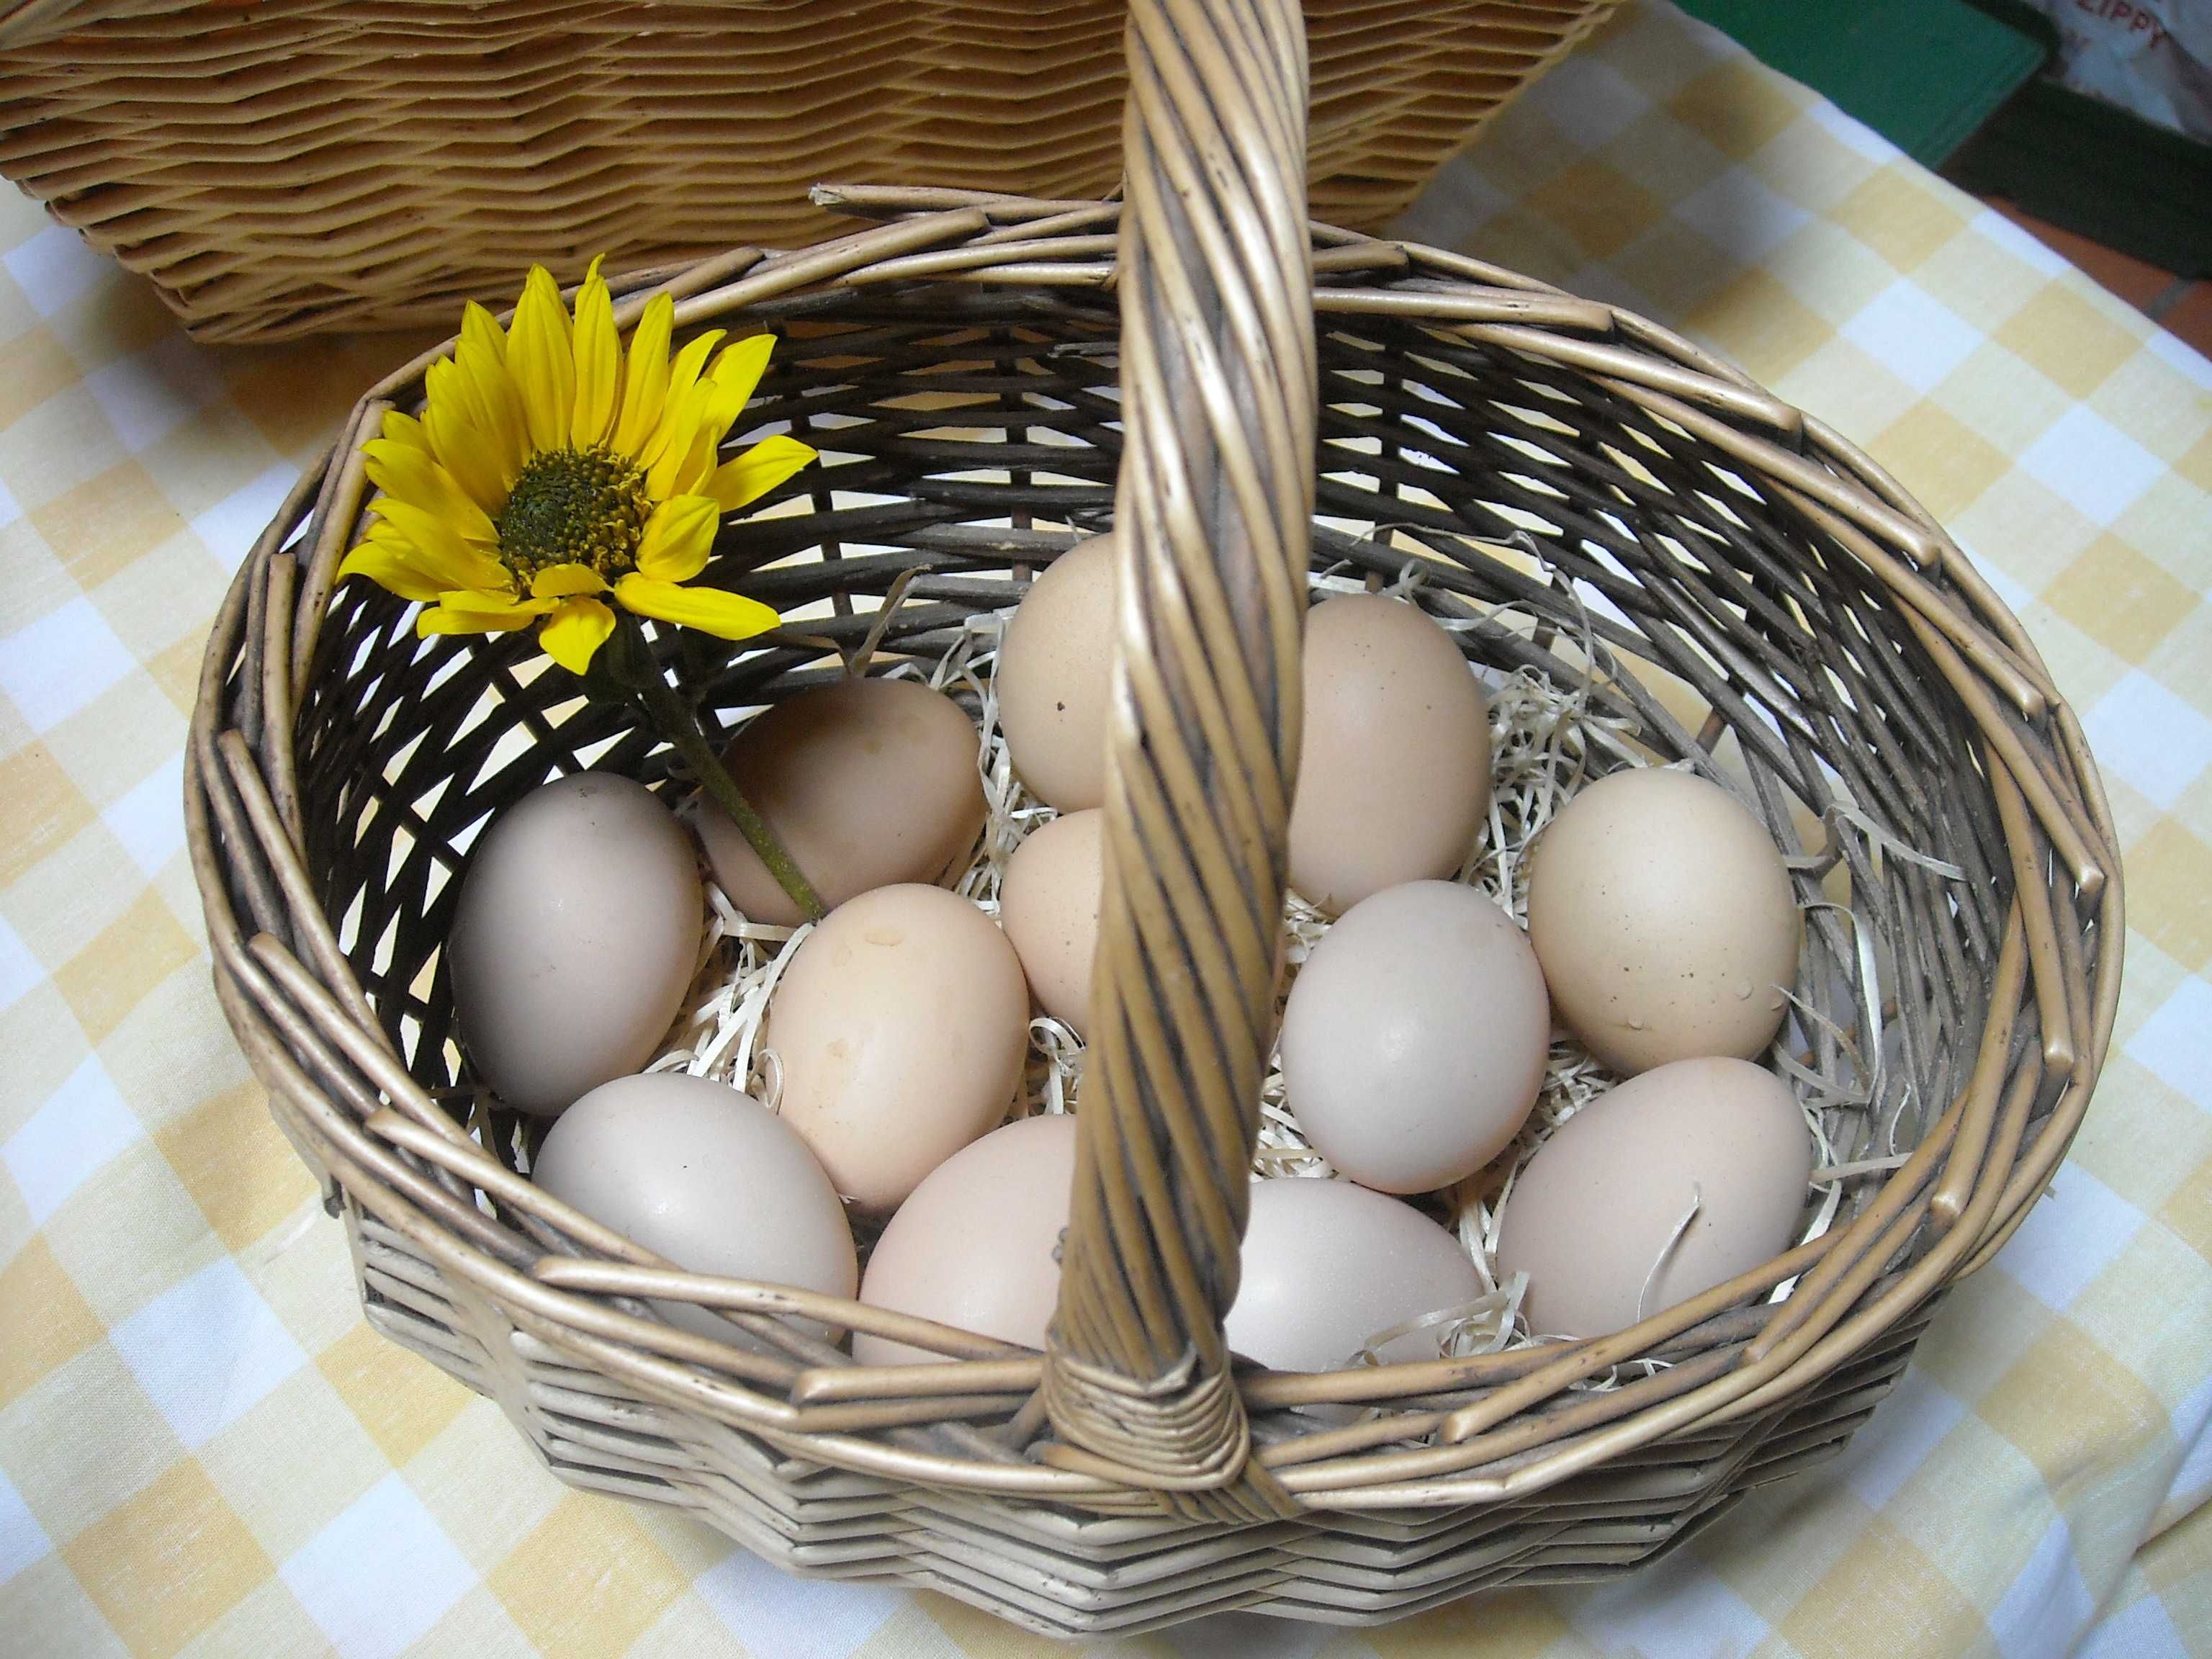 Laranjas limões ovos tomarilhos e chuchus  biológicos